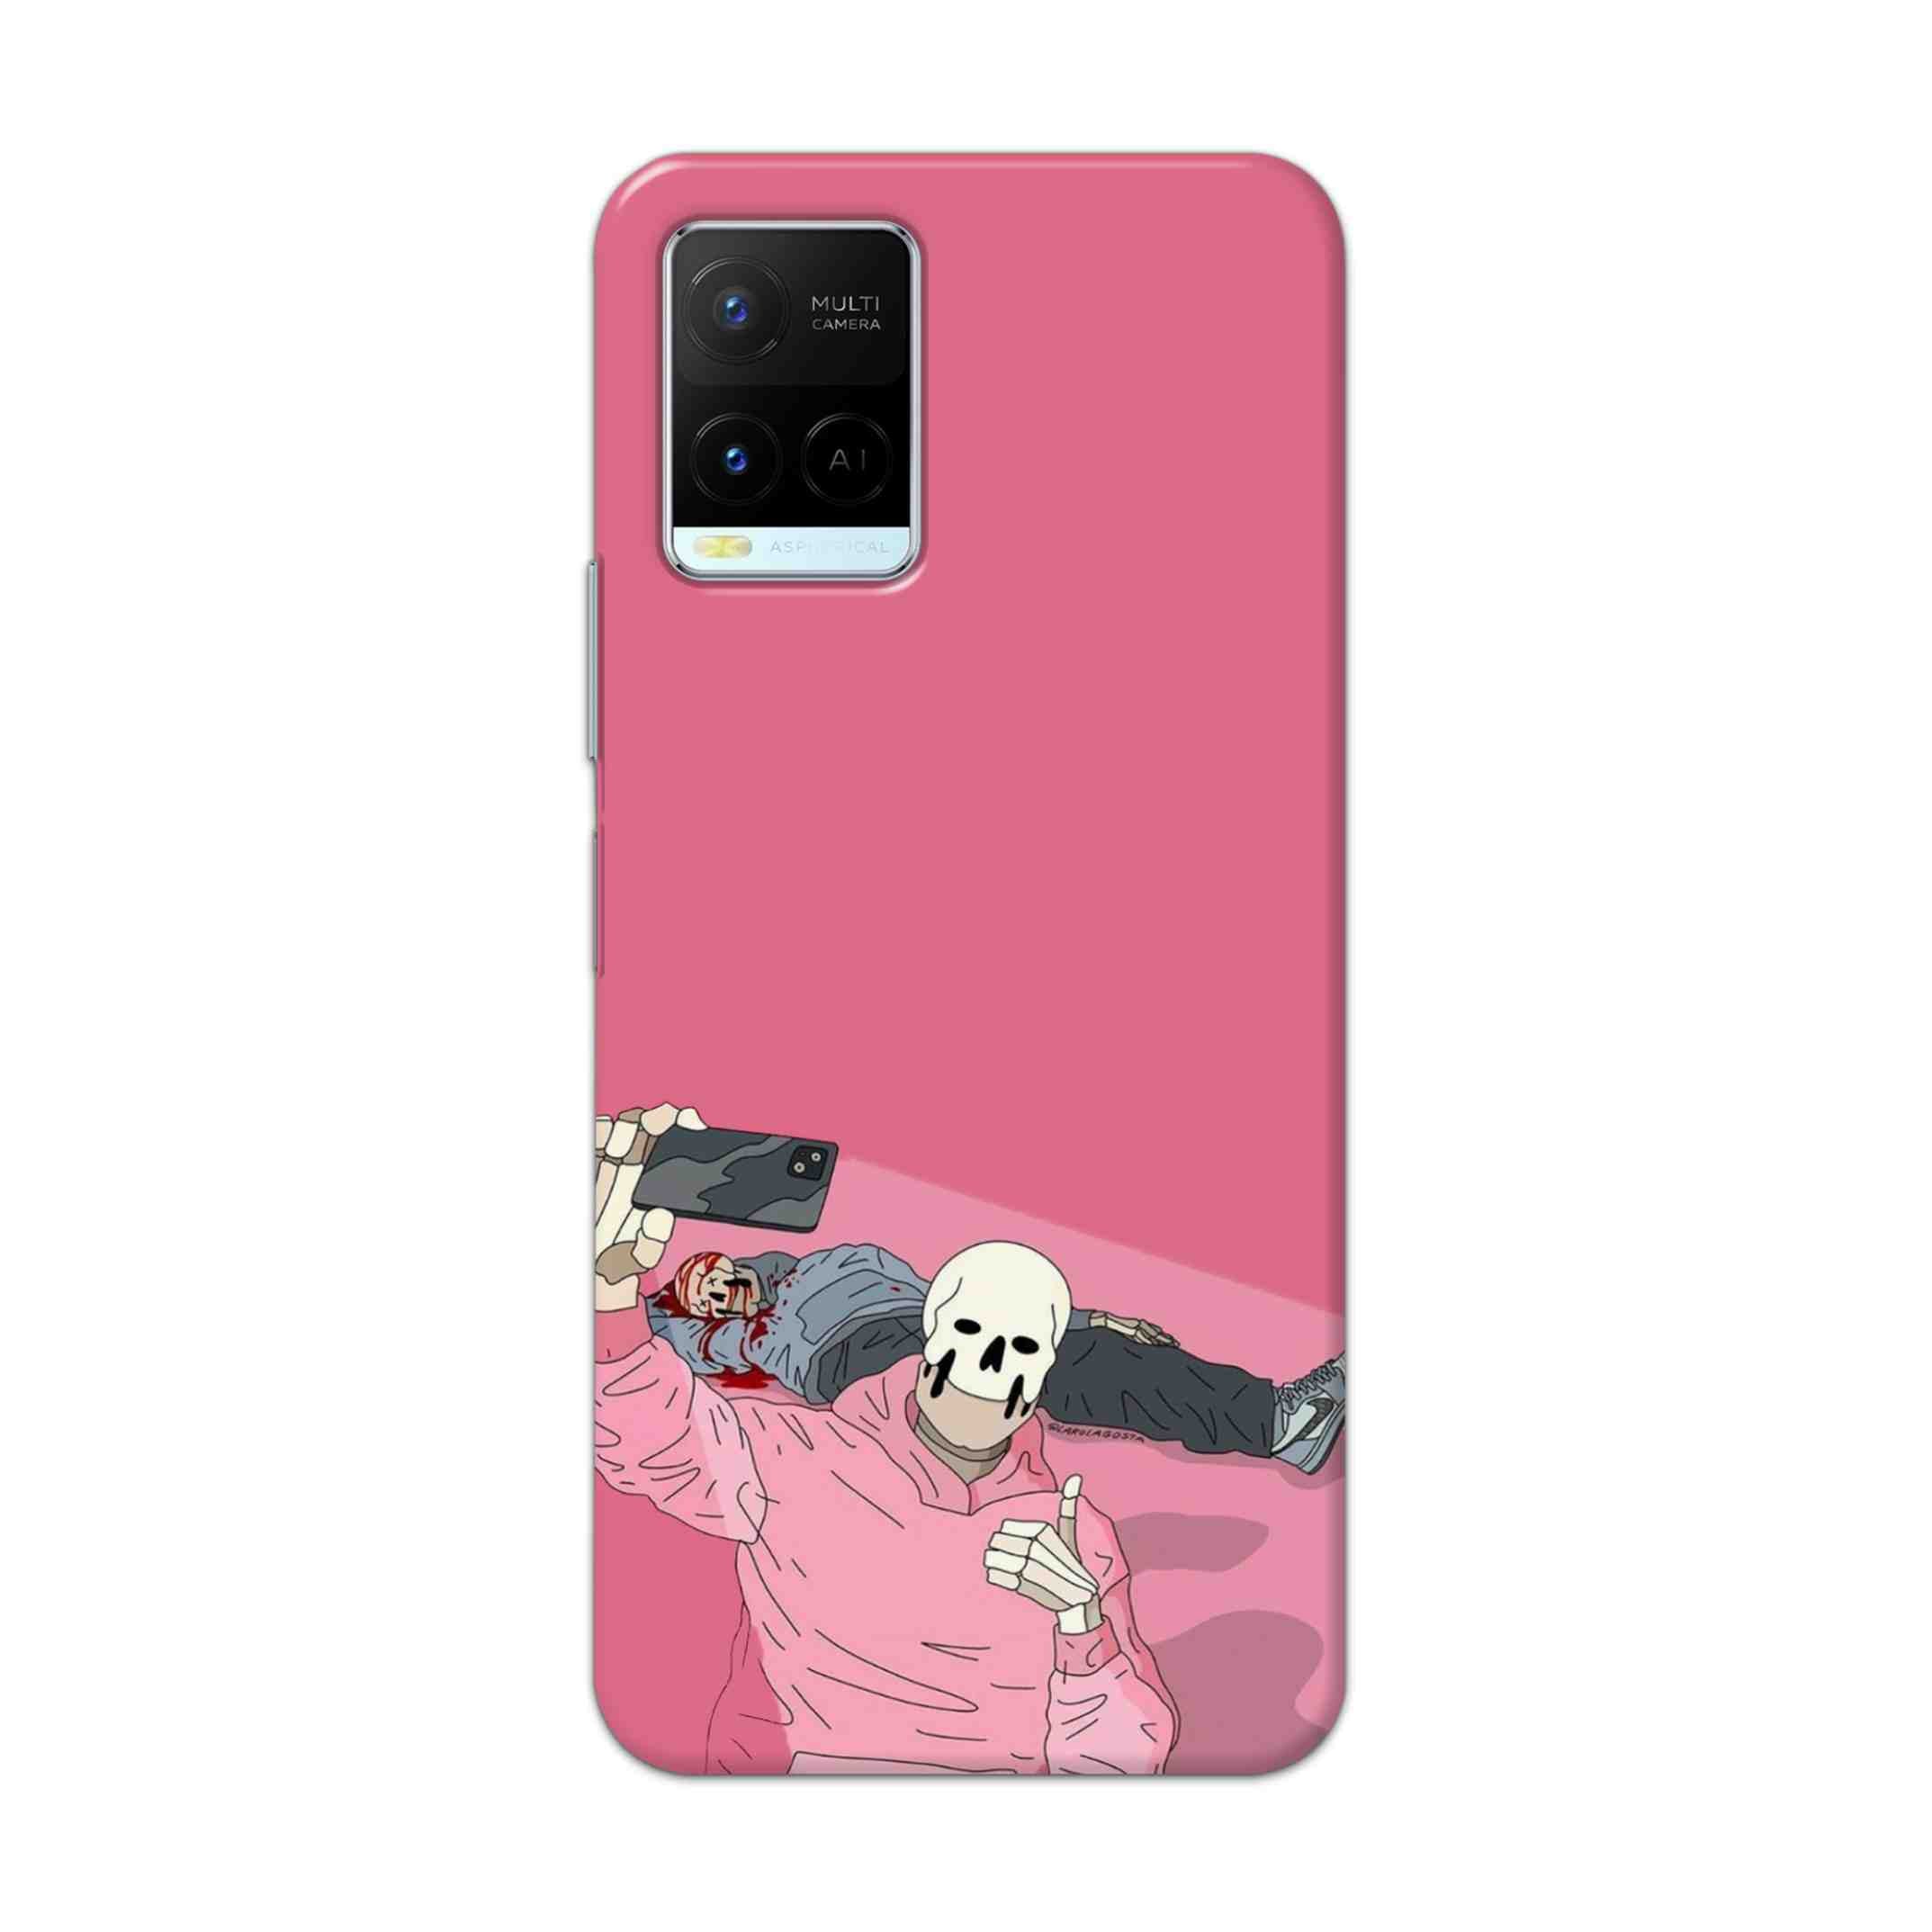 Buy Selfie Hard Back Mobile Phone Case Cover For Vivo Y21 2021 Online